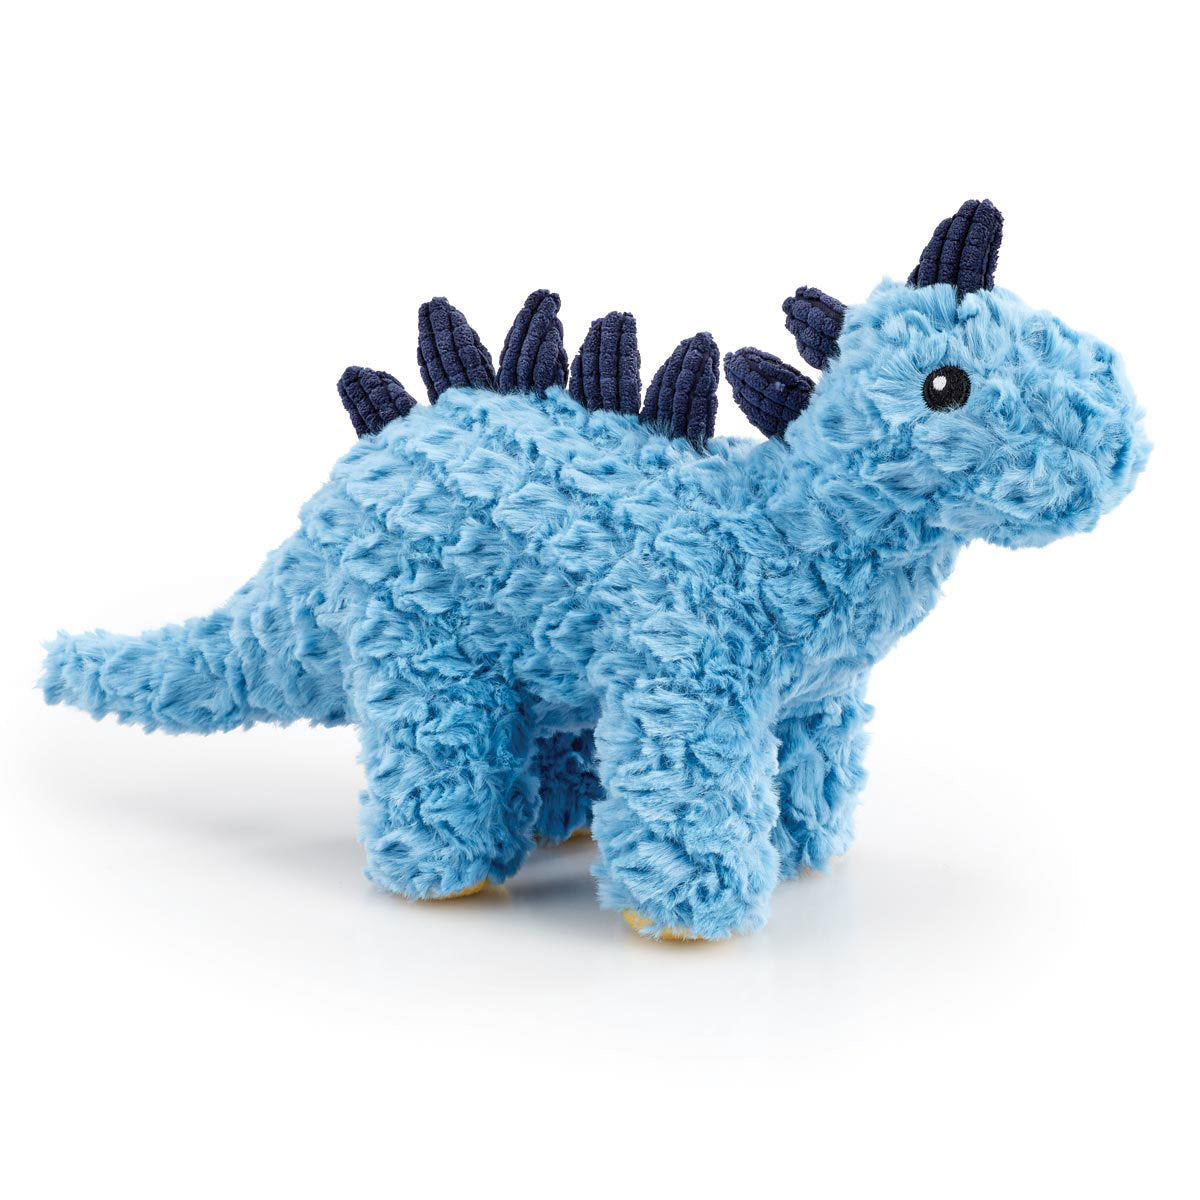 Early Learning Centre Plush Toy - Stegosaurus